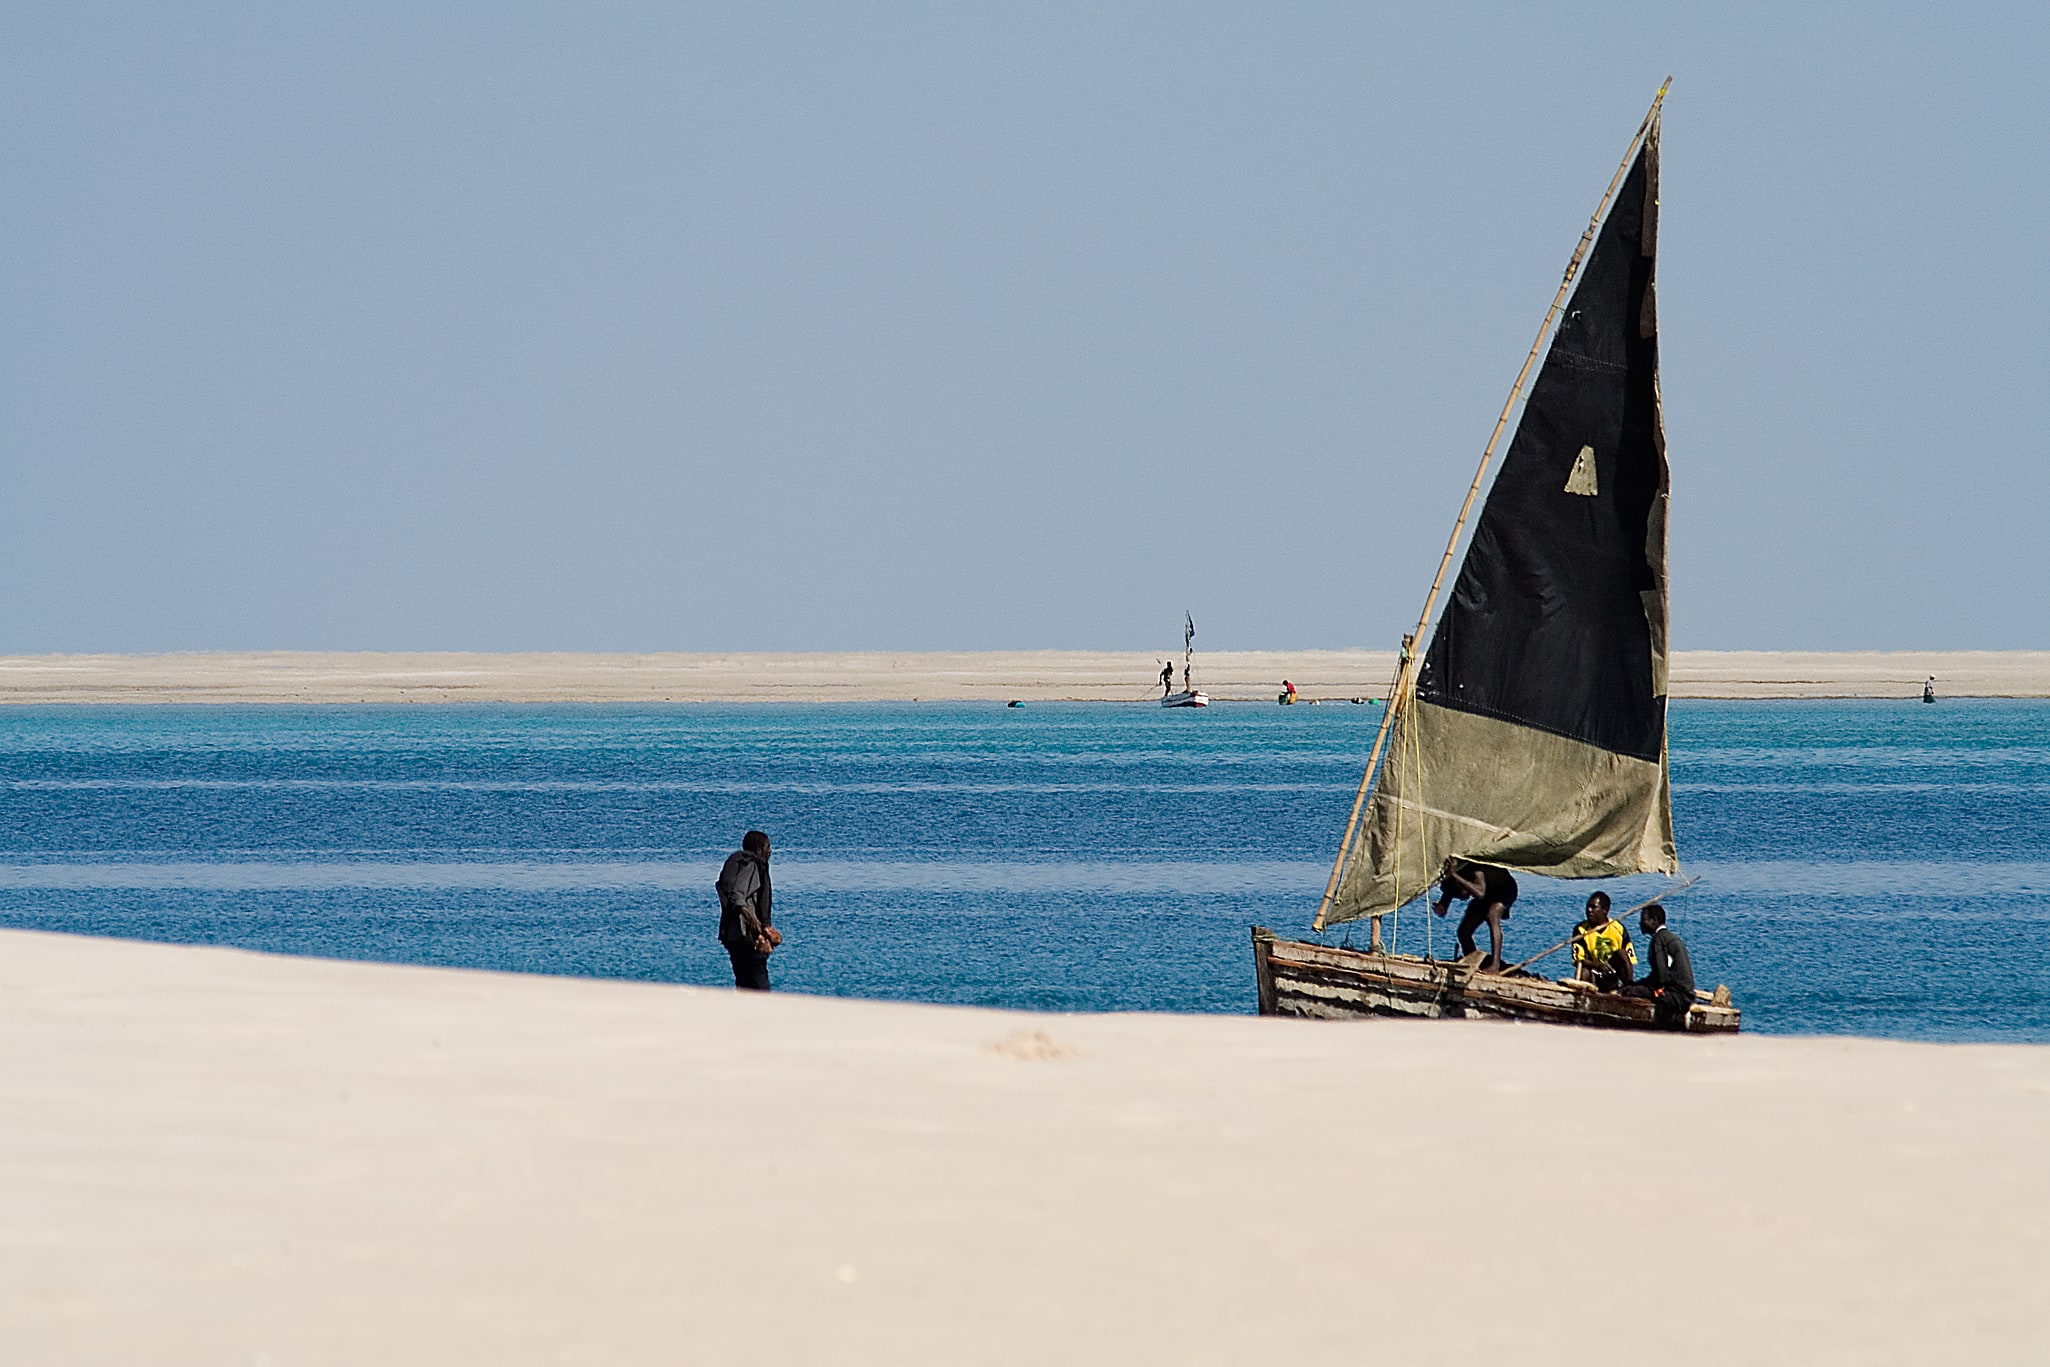 Bazaruto Archipelago National Park, Mozambique